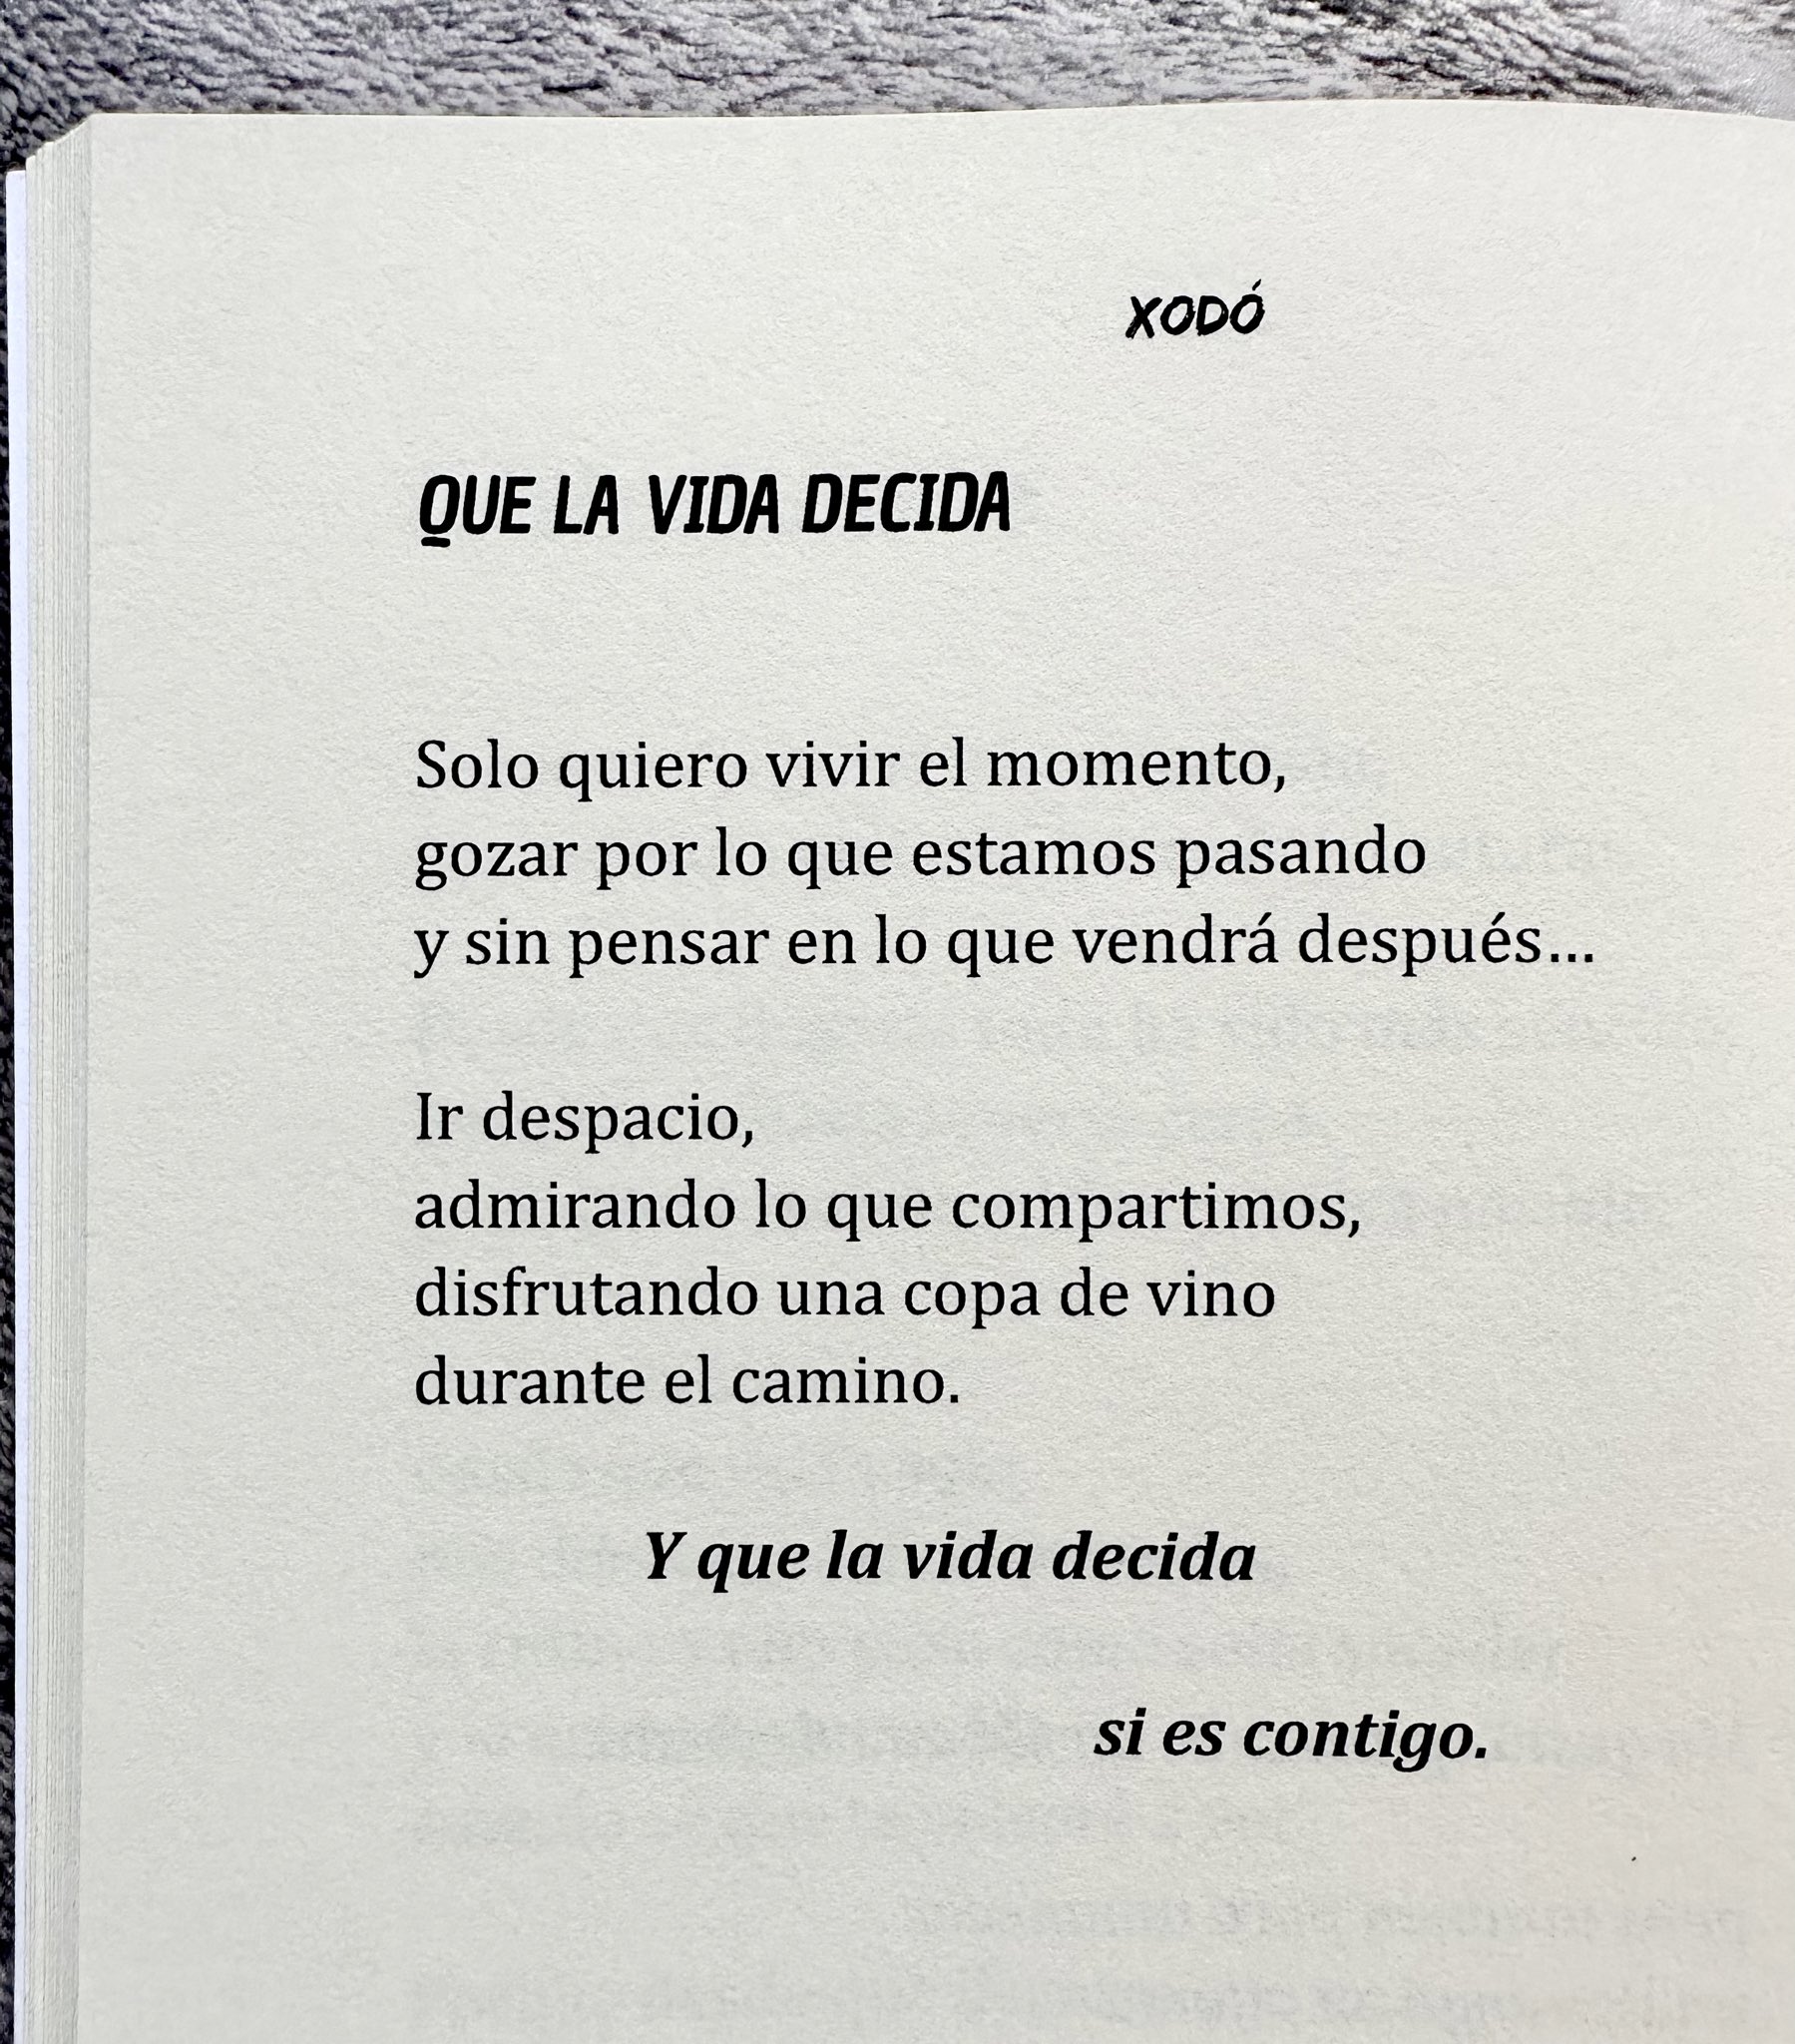 Jairo Guerrero on X: Libro: “Xodó” 📕  / X